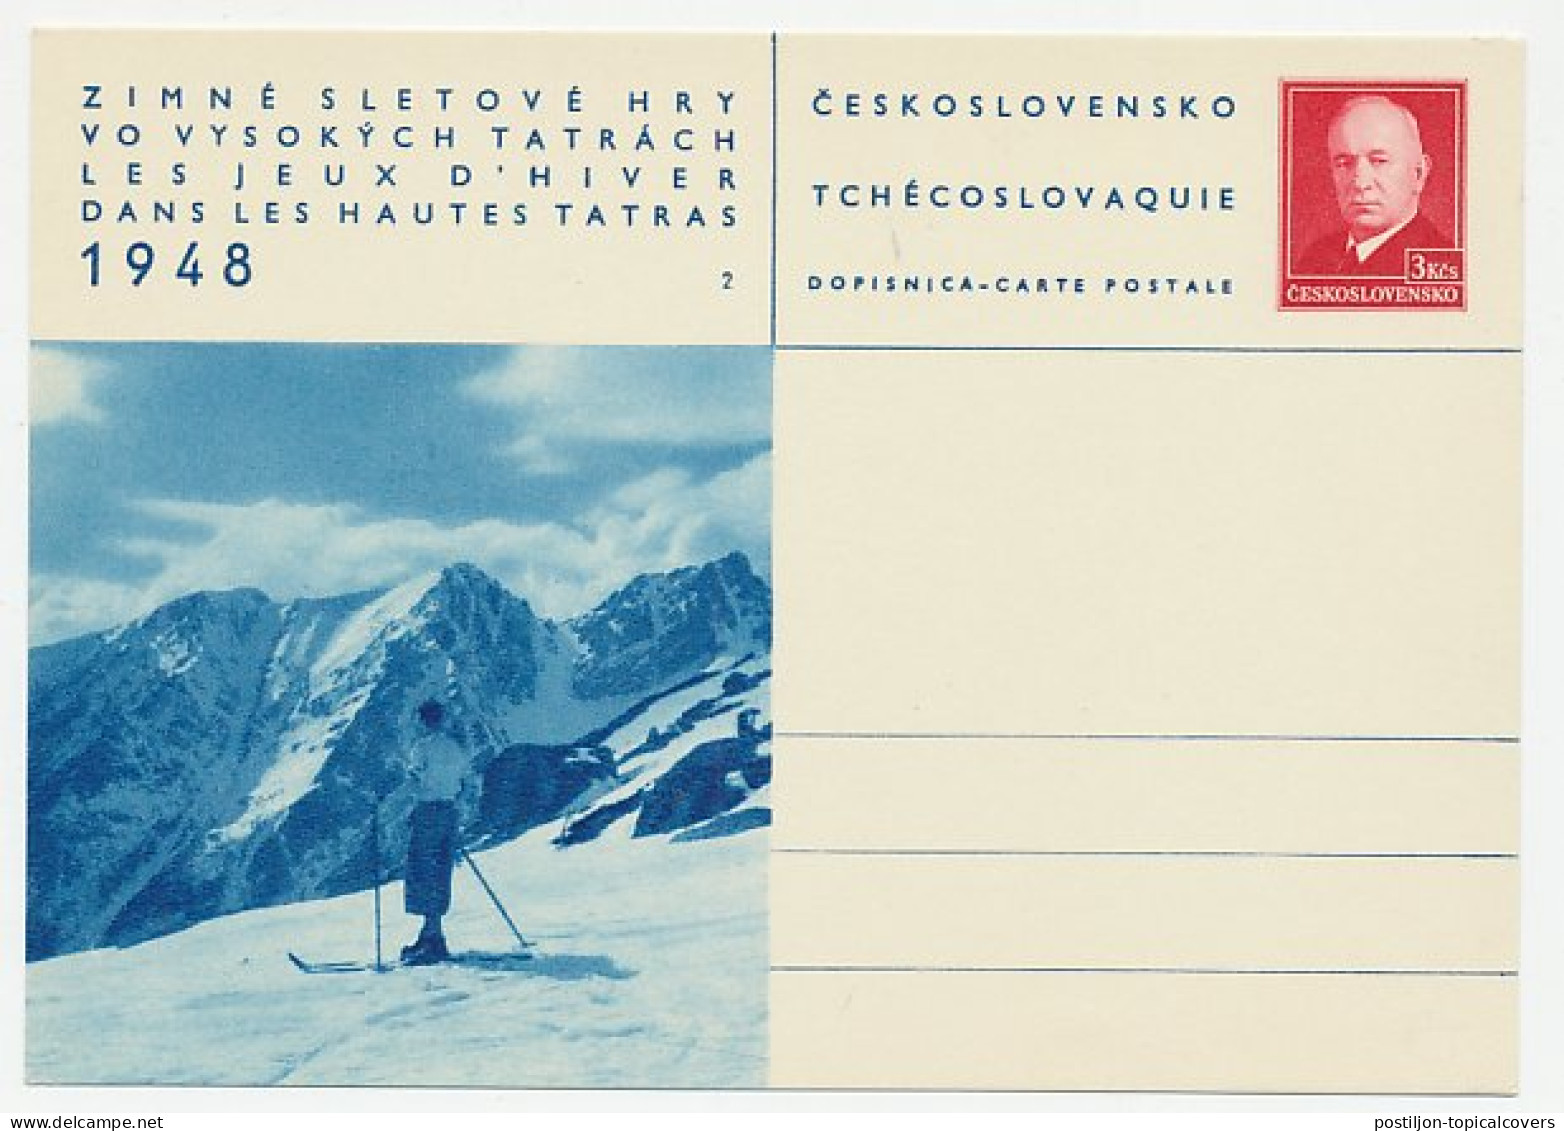 Postal Stationery Czechoslovakia 1948 Winter Games - Skiing - Wintersport (Sonstige)